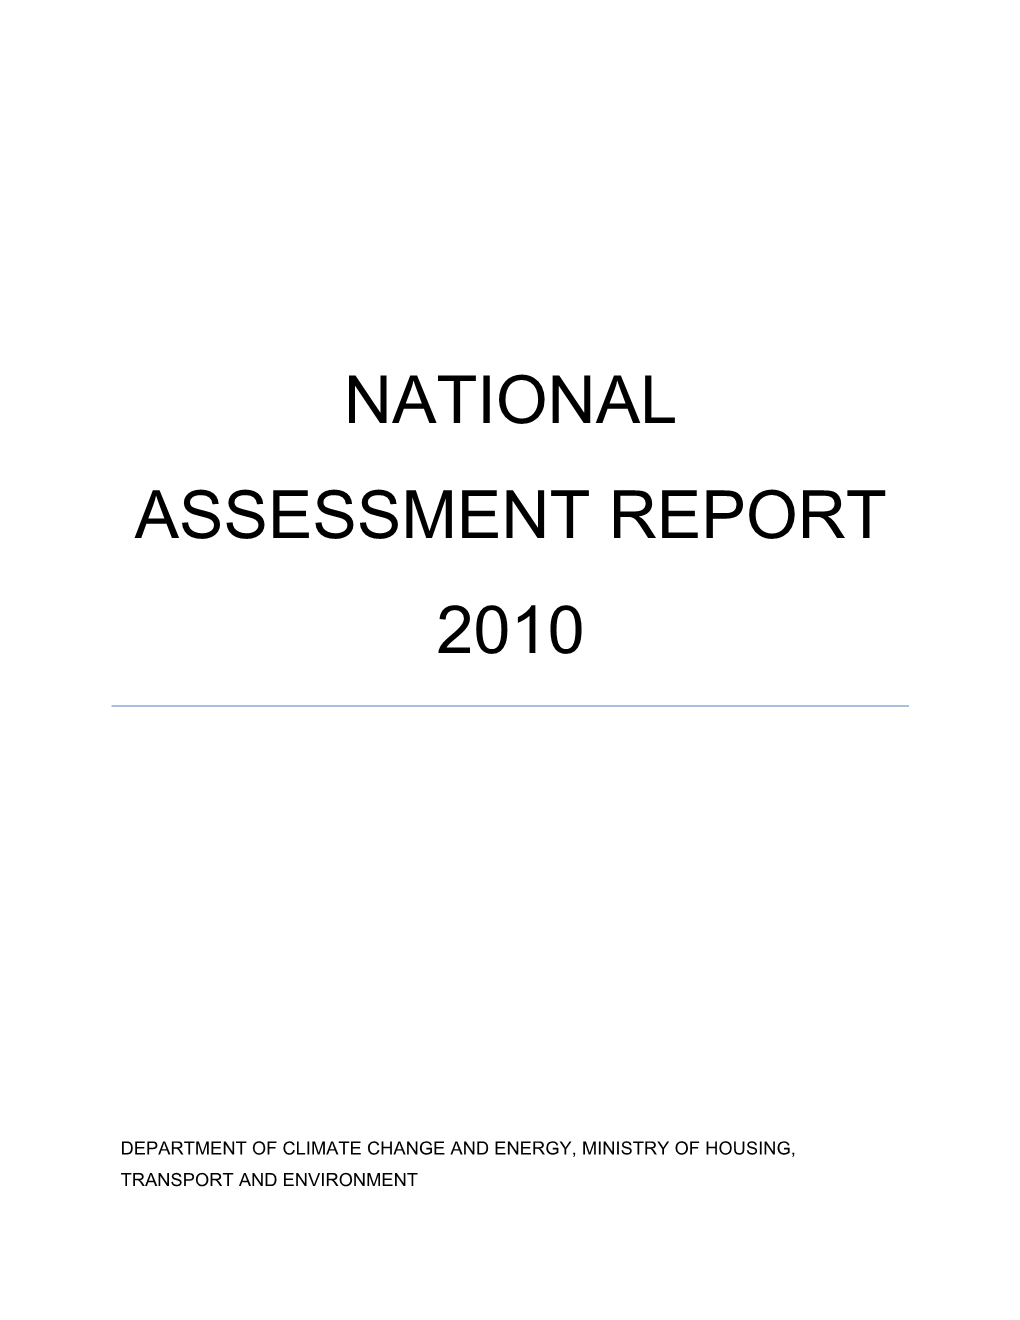 National Assessment Report 2010